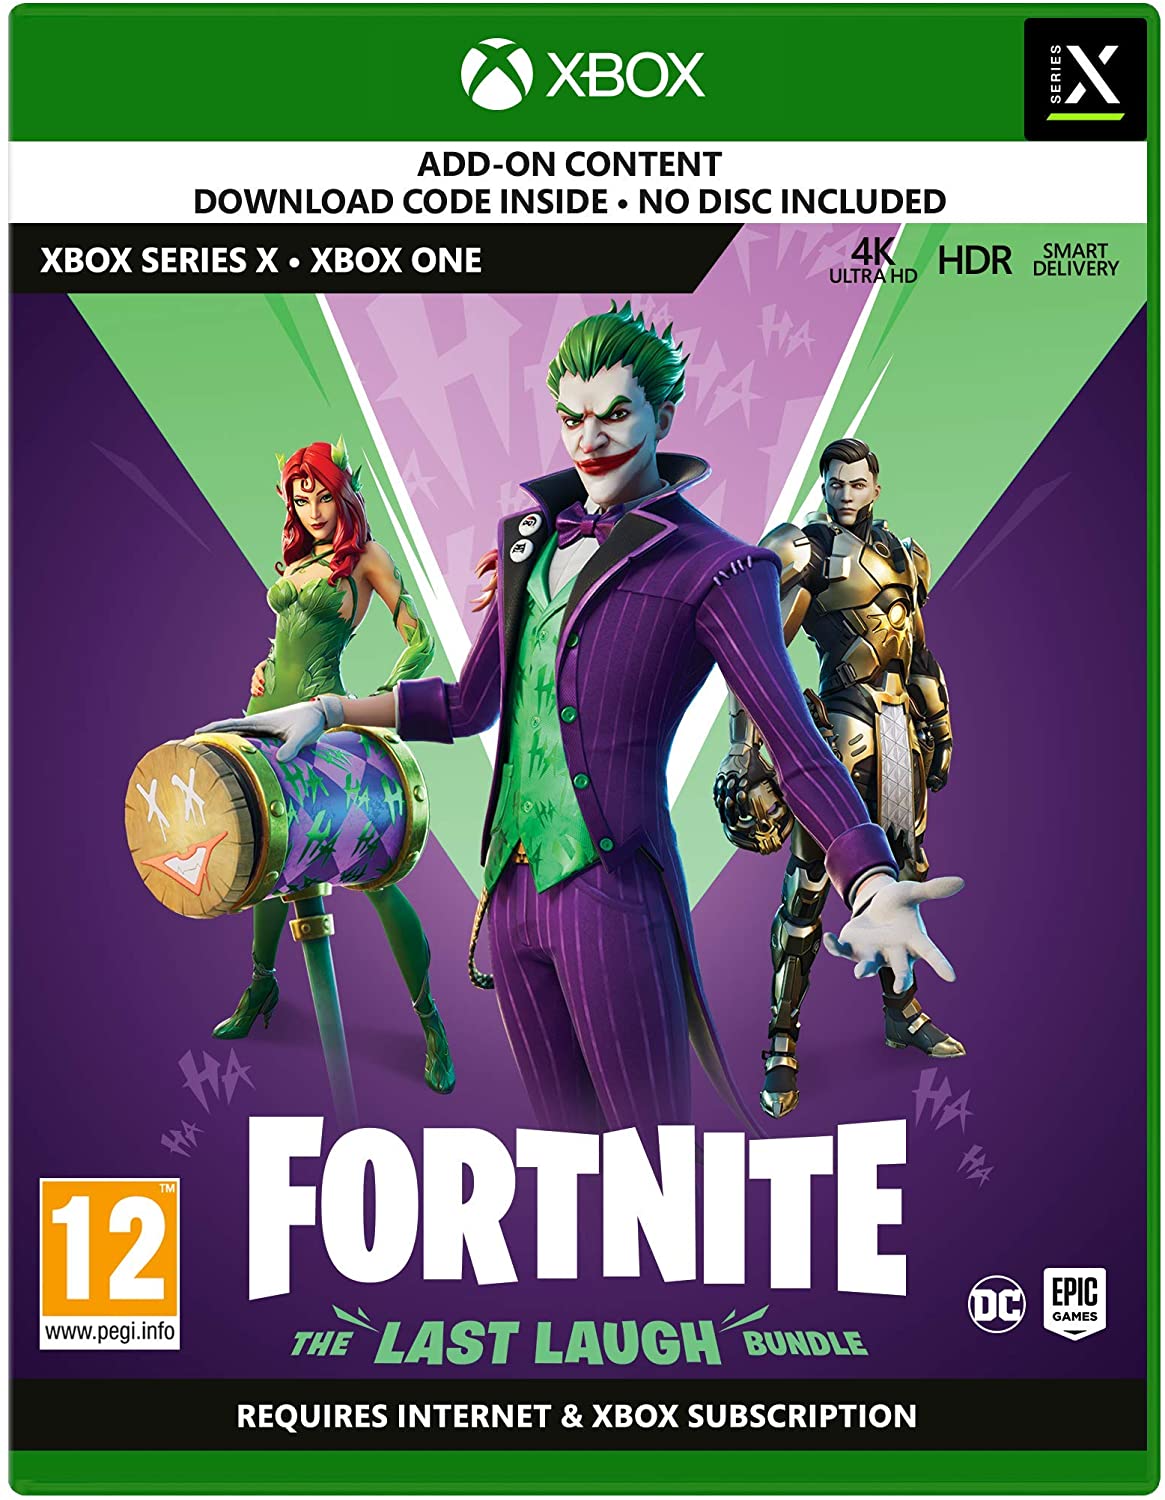 Fortnite: The Last Laugh Bundle Digital Download Key (Xbox One/Series X): Europe